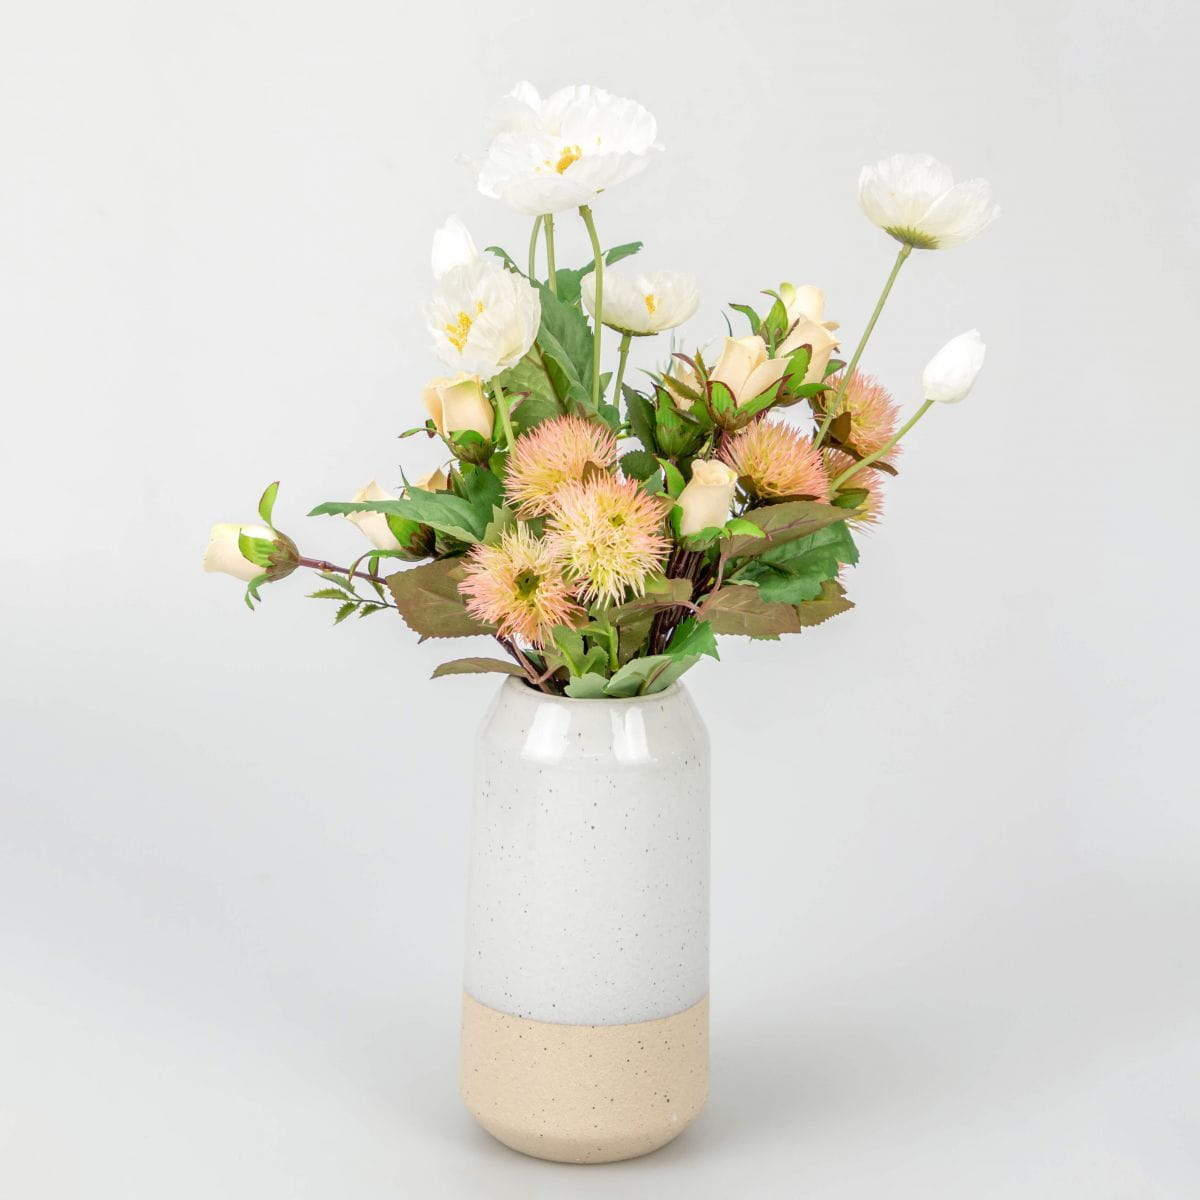 Flower Arrangement With Vase For Home Decorations